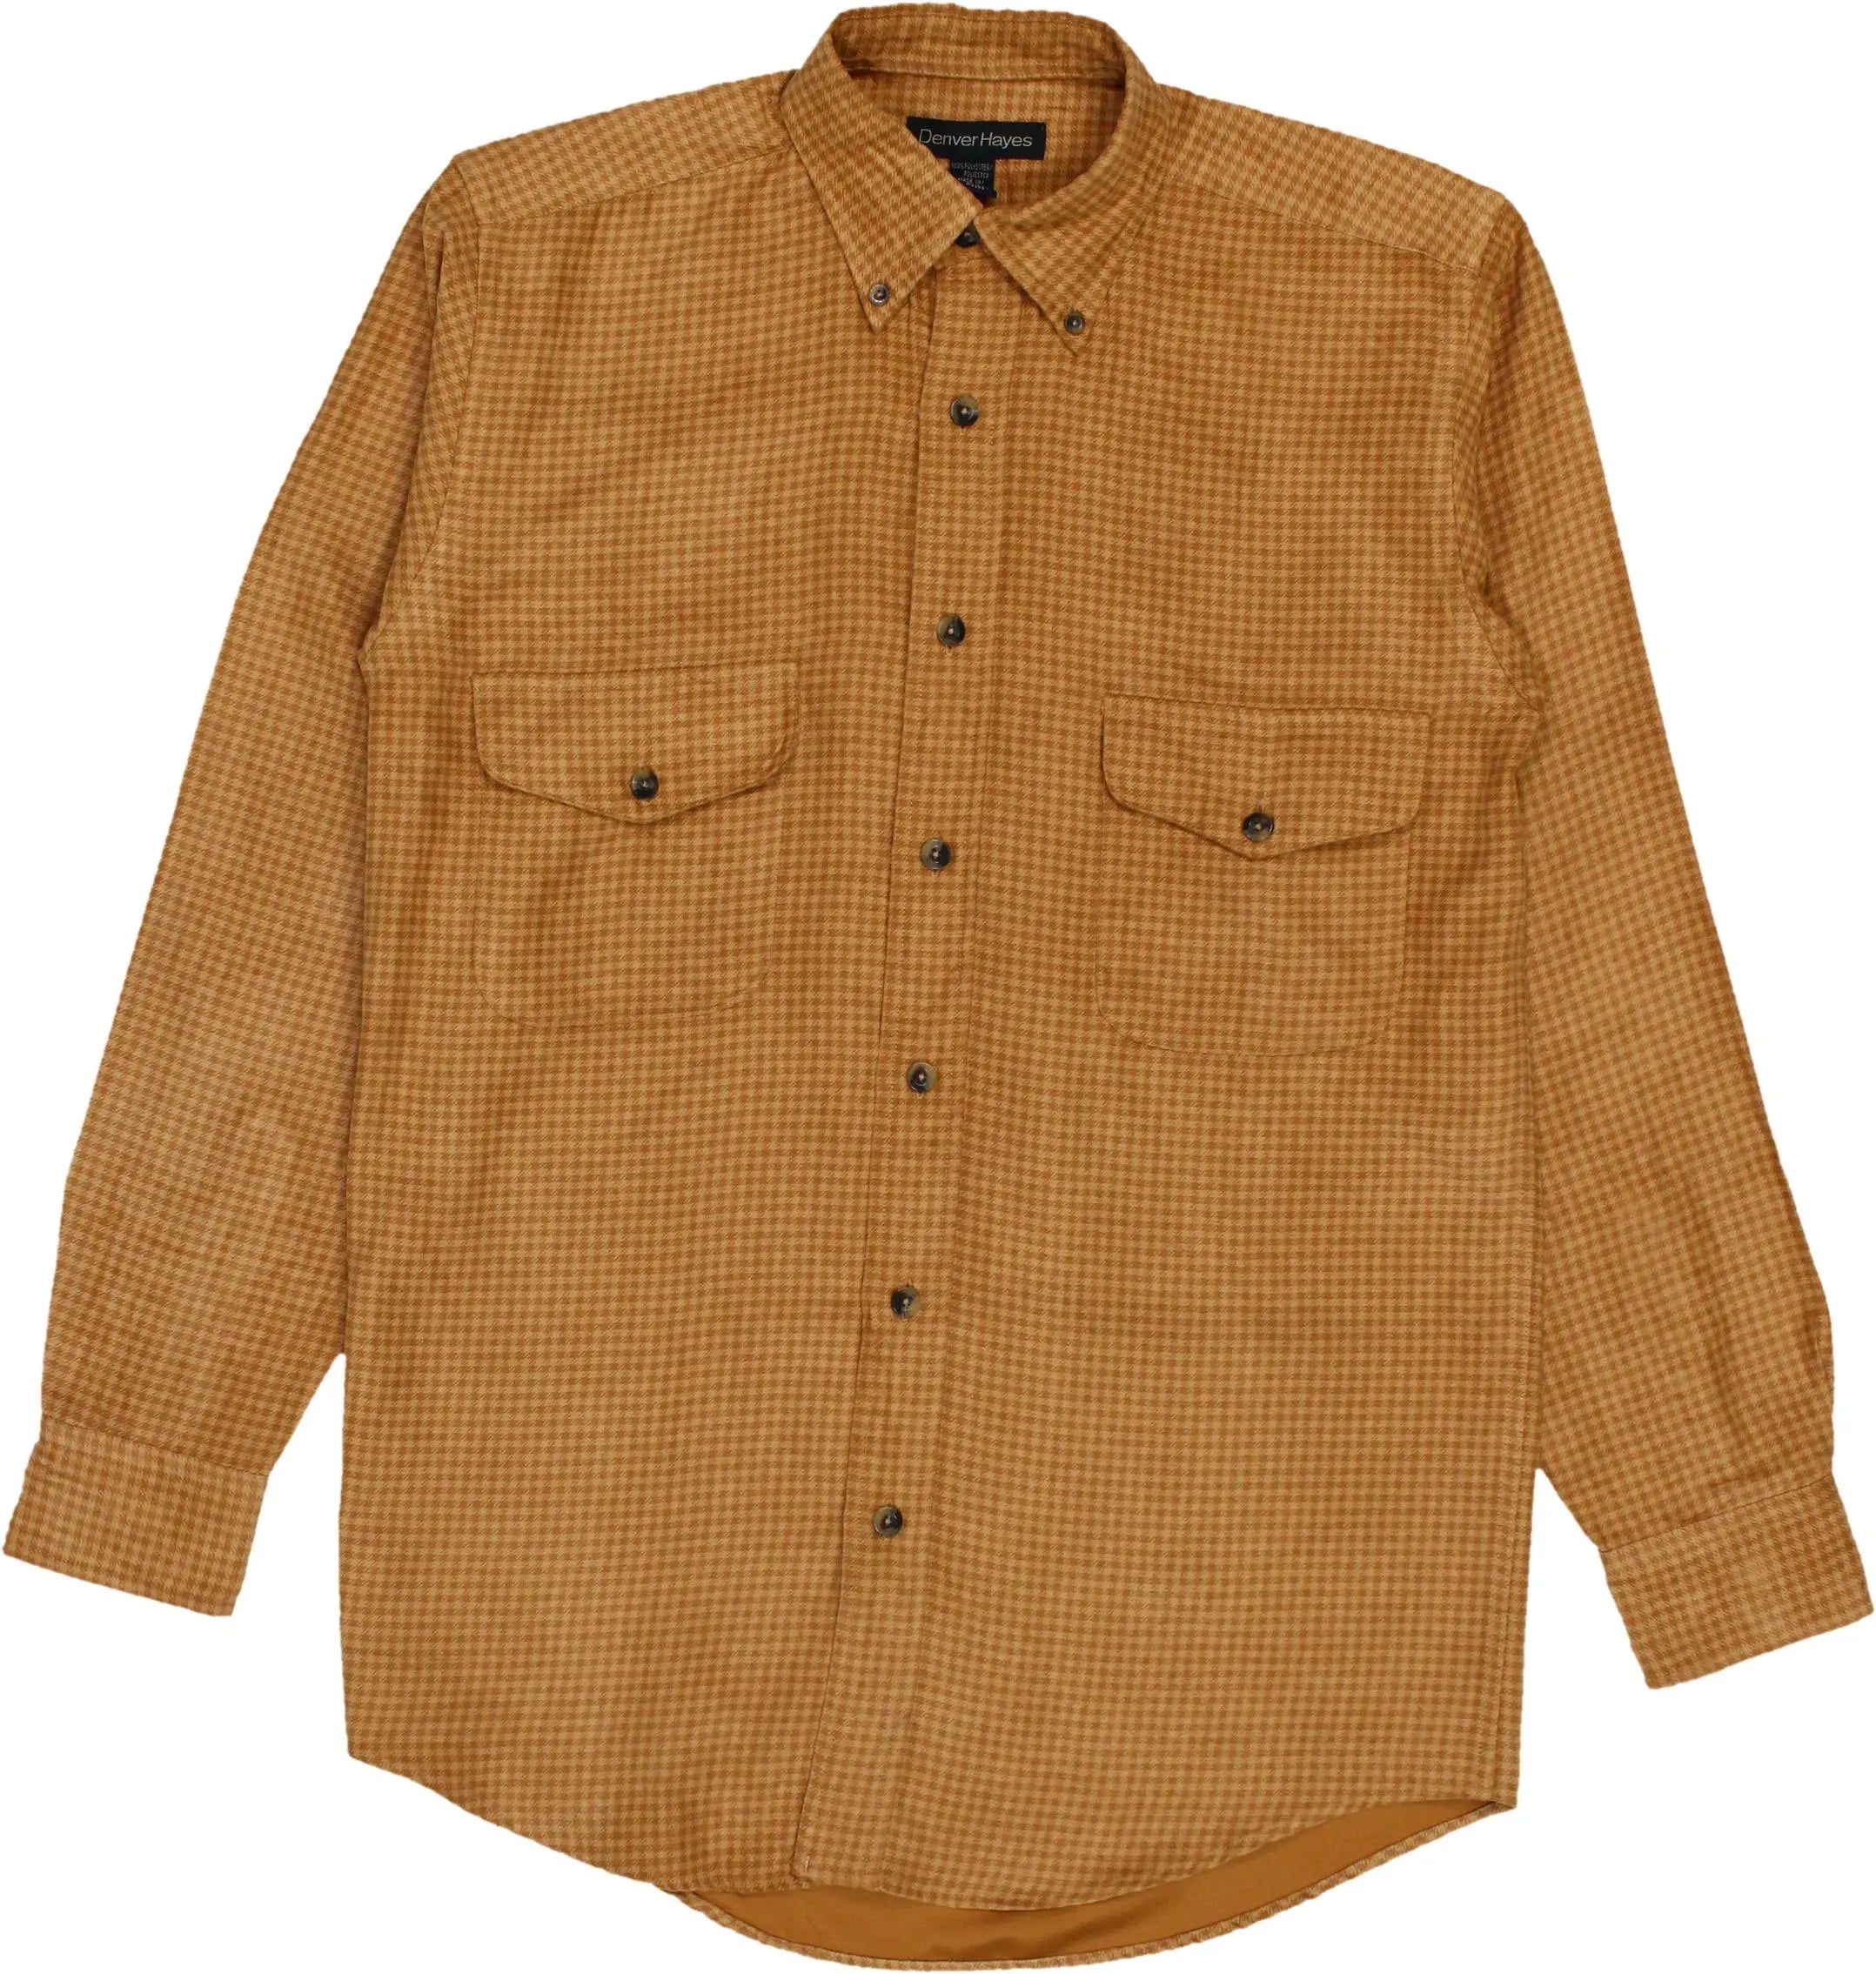 Denver Hayes - Patterned Shirt- ThriftTale.com - Vintage and second handclothing